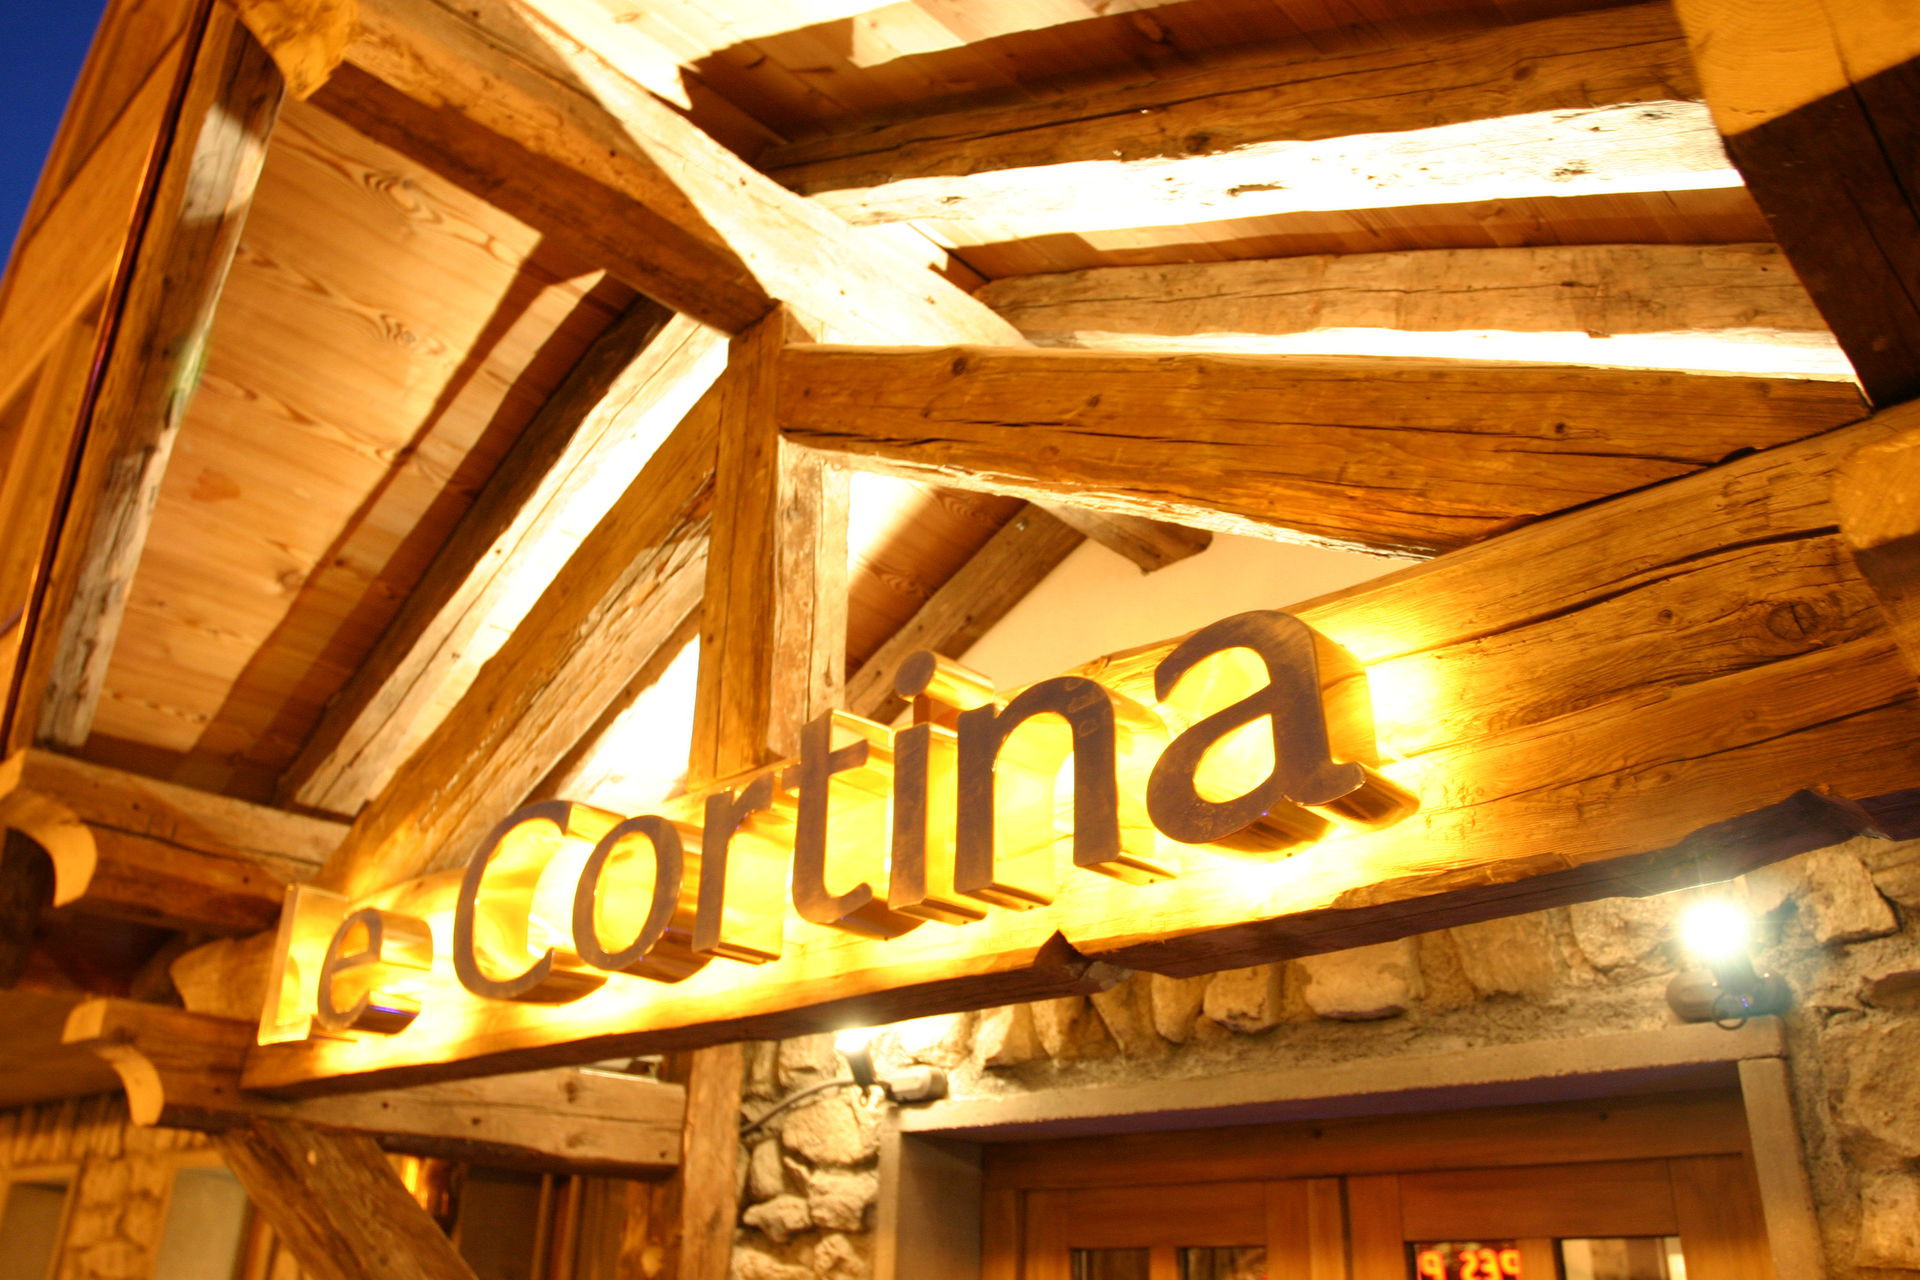 Appartement Cortina - 11 - Appt grande terrasse - 8 pers - Les Deux Alpes Venosc